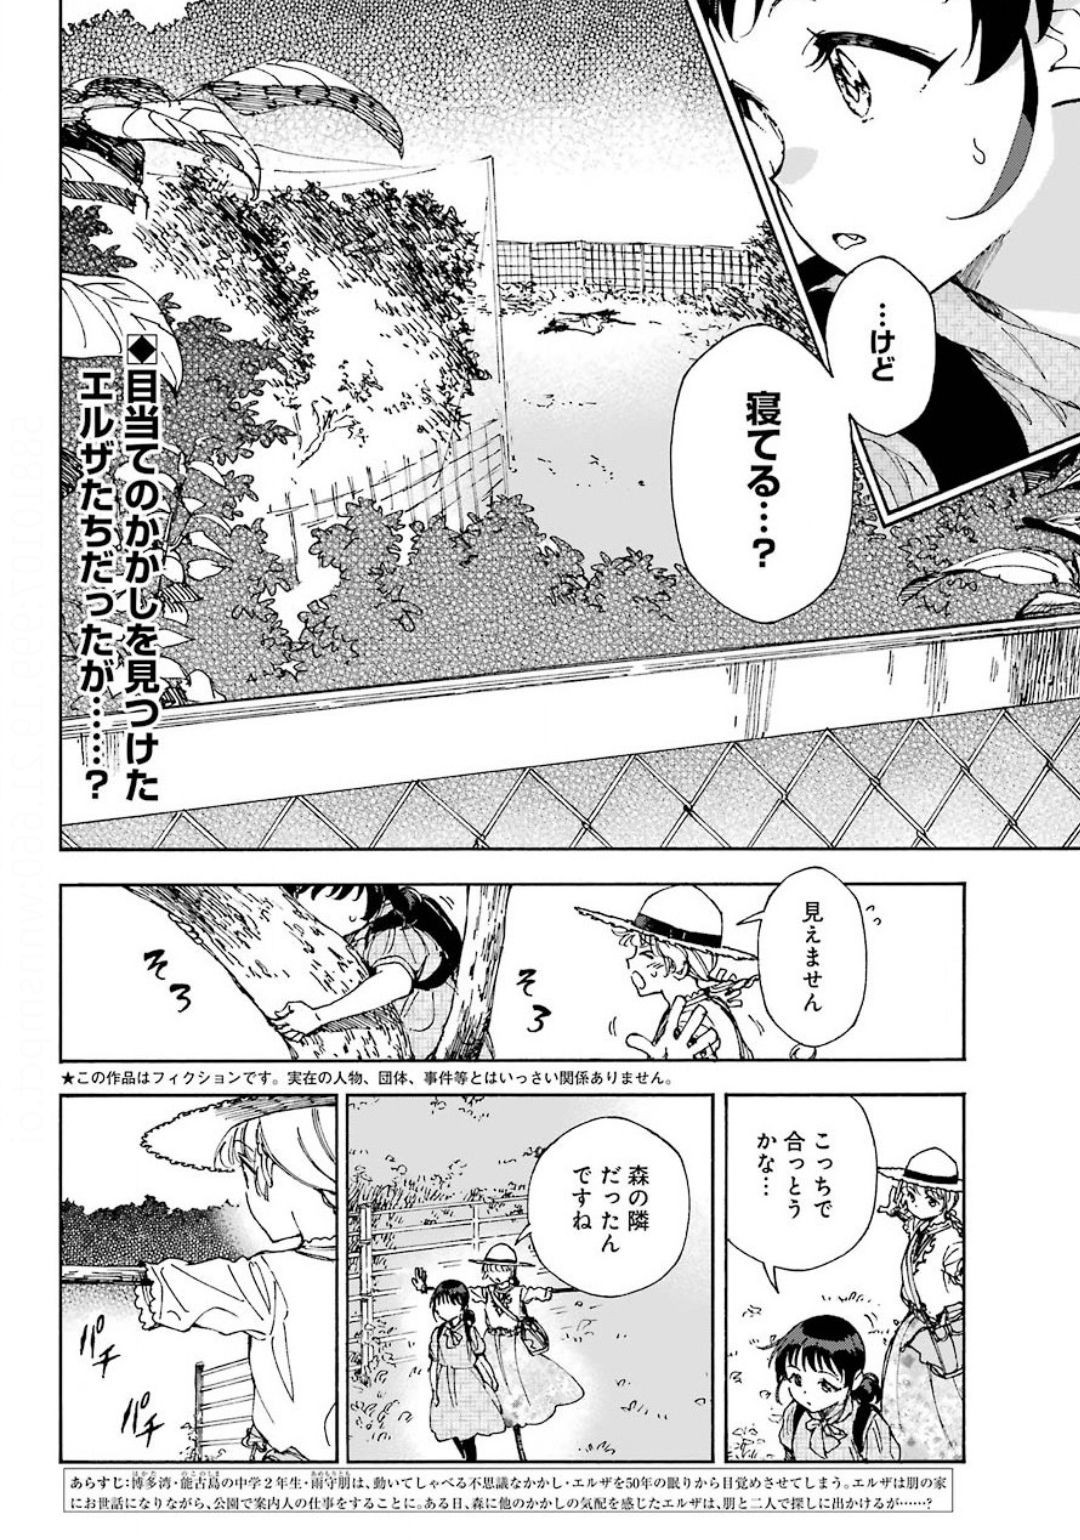 Hotomeku-kakashi - Chapter 06-2 - Page 3